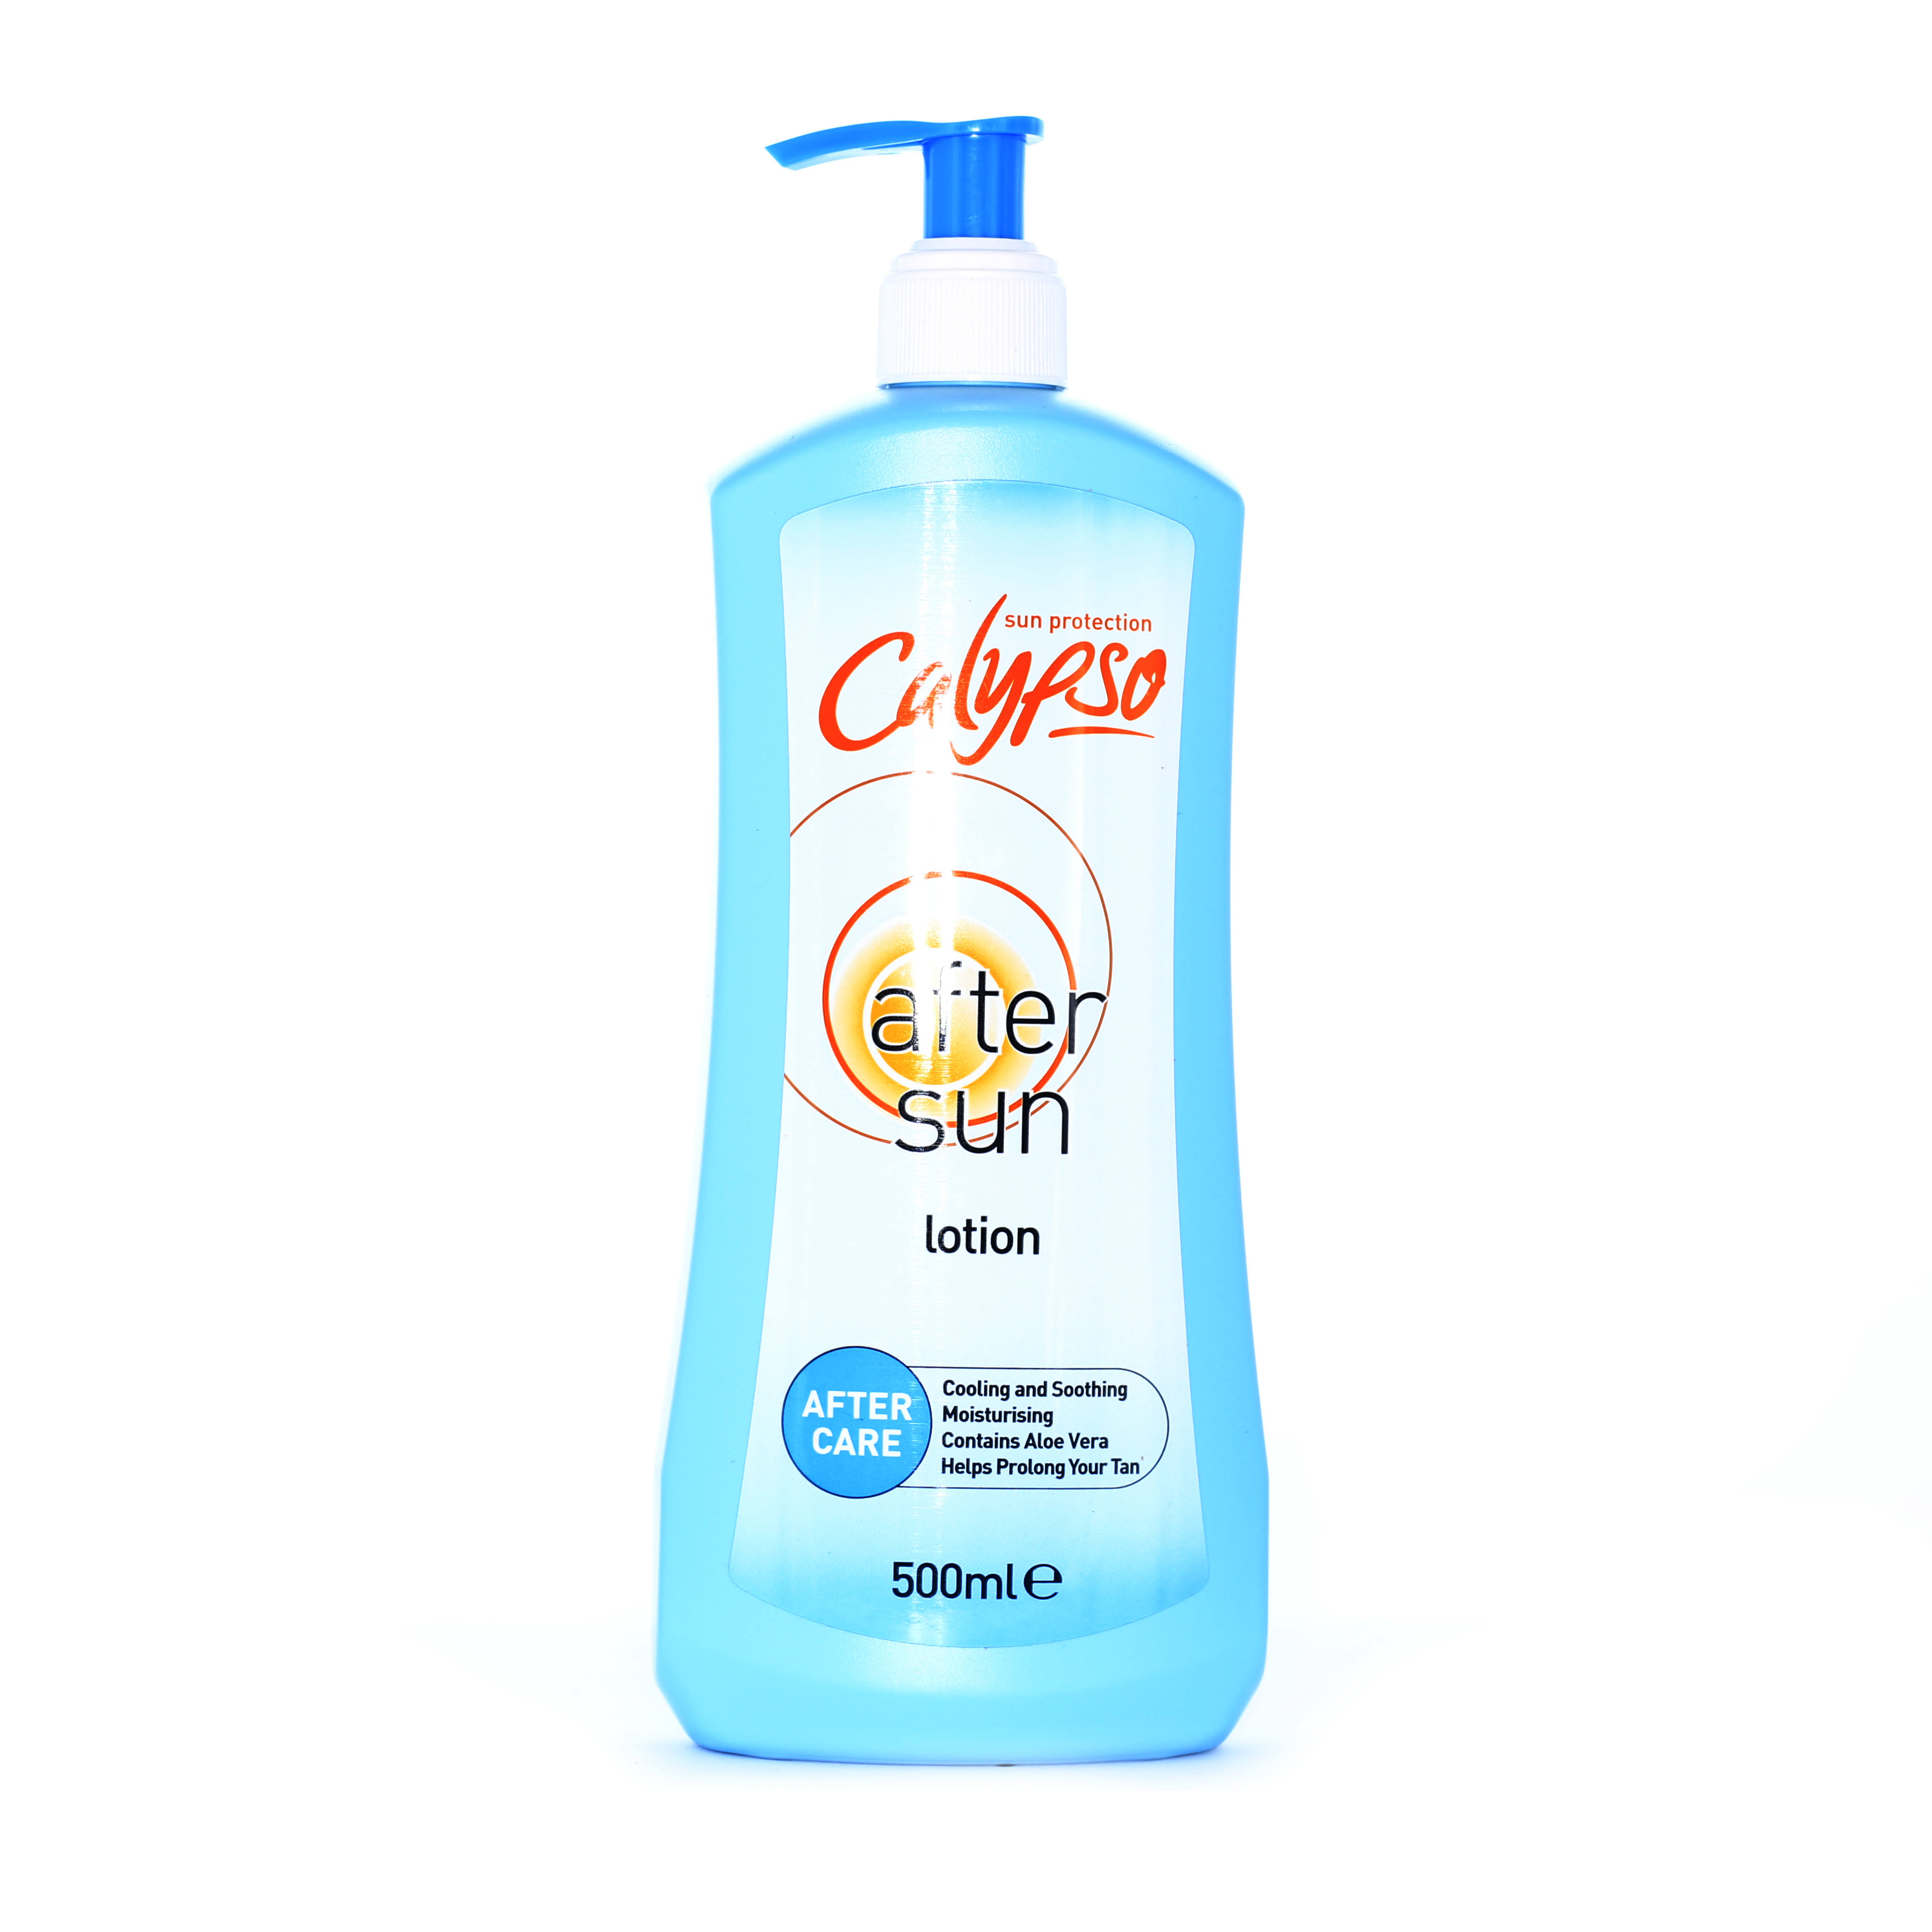 Calypso Sun Protection After Sun Moisturising Lotion - After Care, 500ml